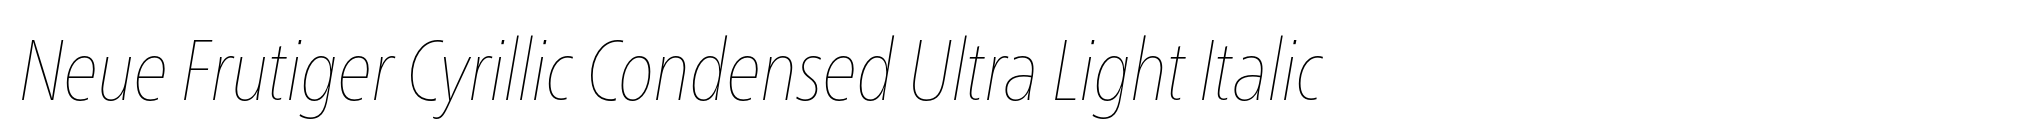 Neue Frutiger Cyrillic Condensed Ultra Light Italic image